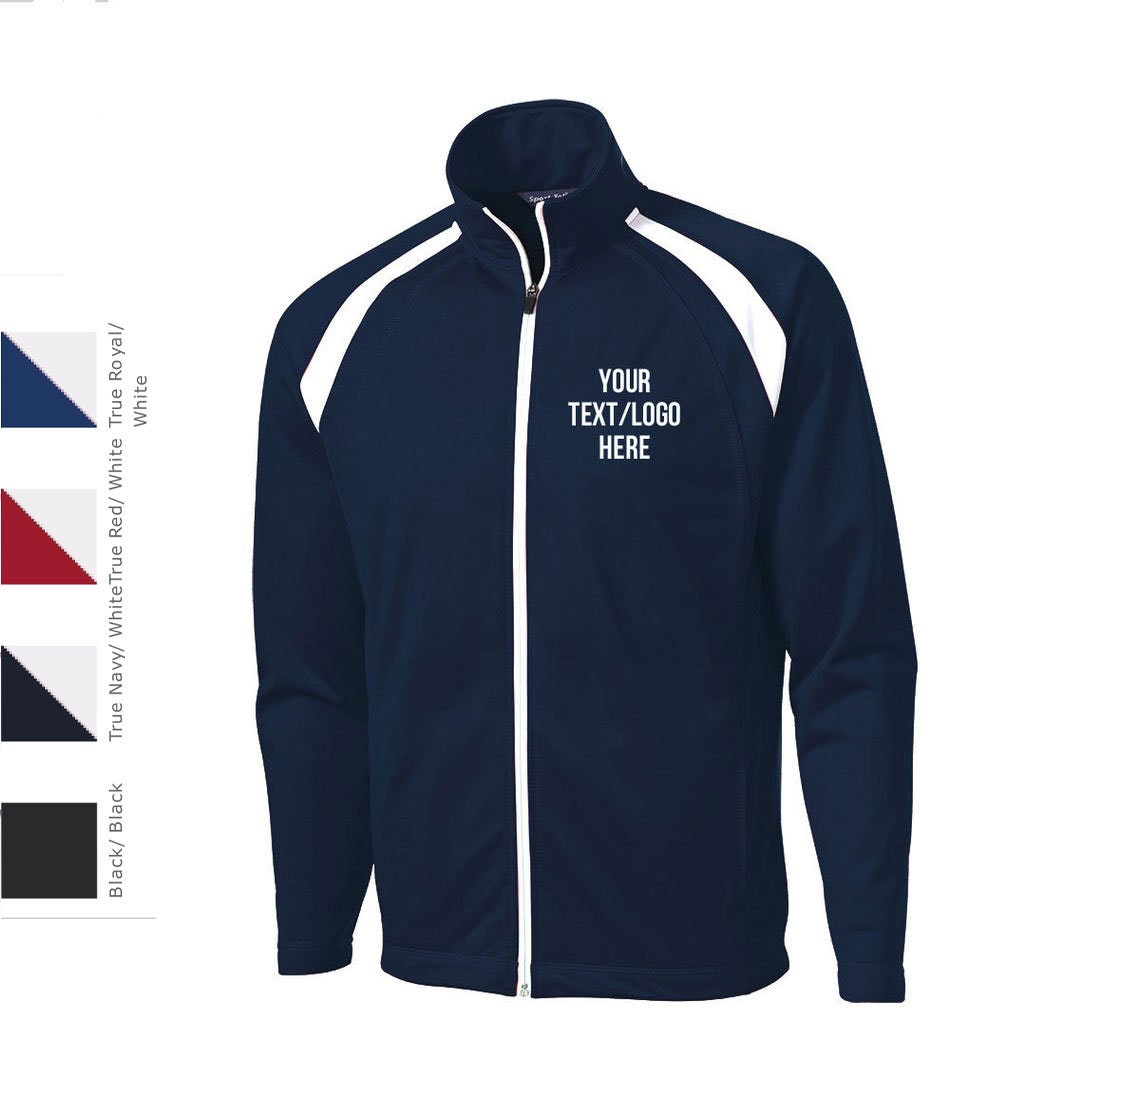 Custom Embroidered Sport-tek Tricot Track Jacket Monogrammed Team